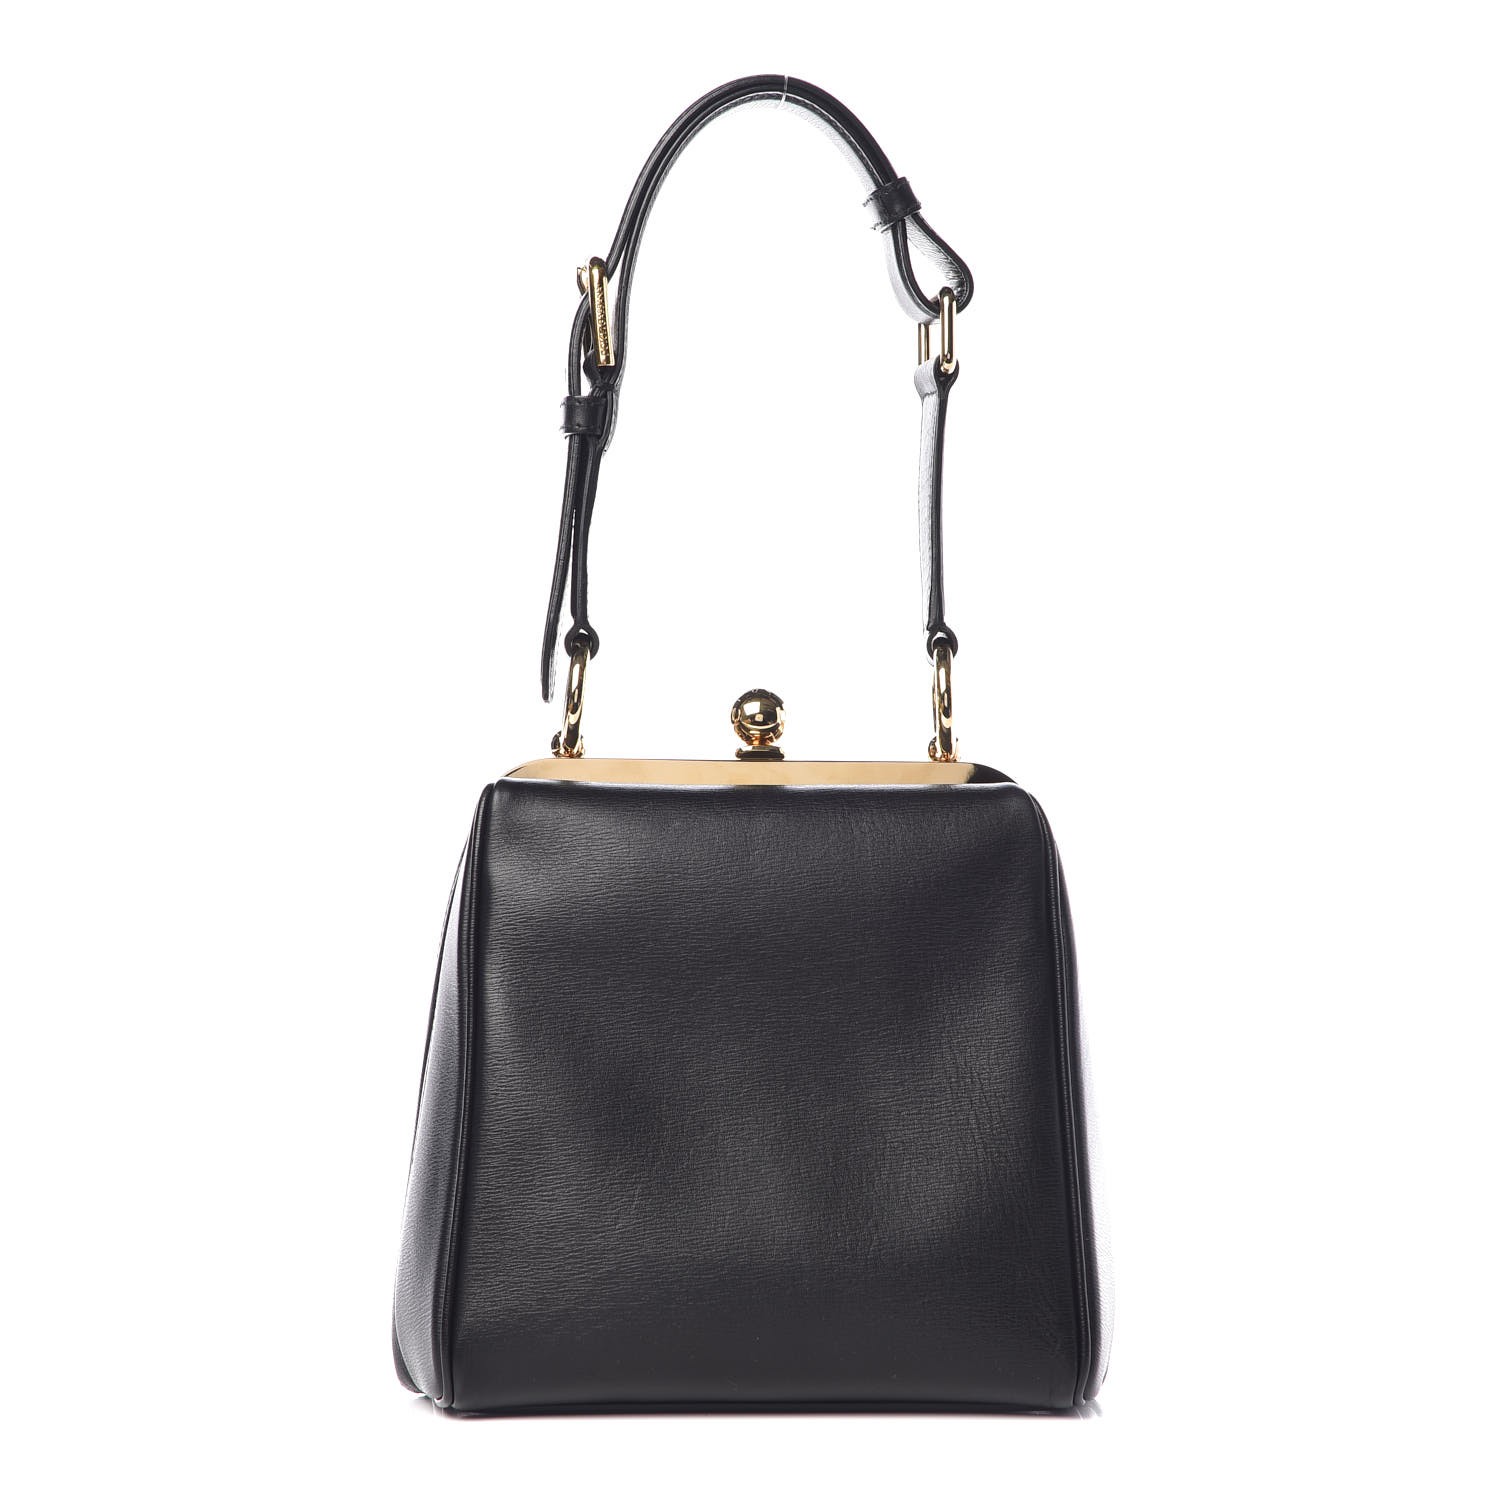 DOLCE & GABBANA Calfskin Agata Shoulder Bag in the color Black by FASHIONPHILE